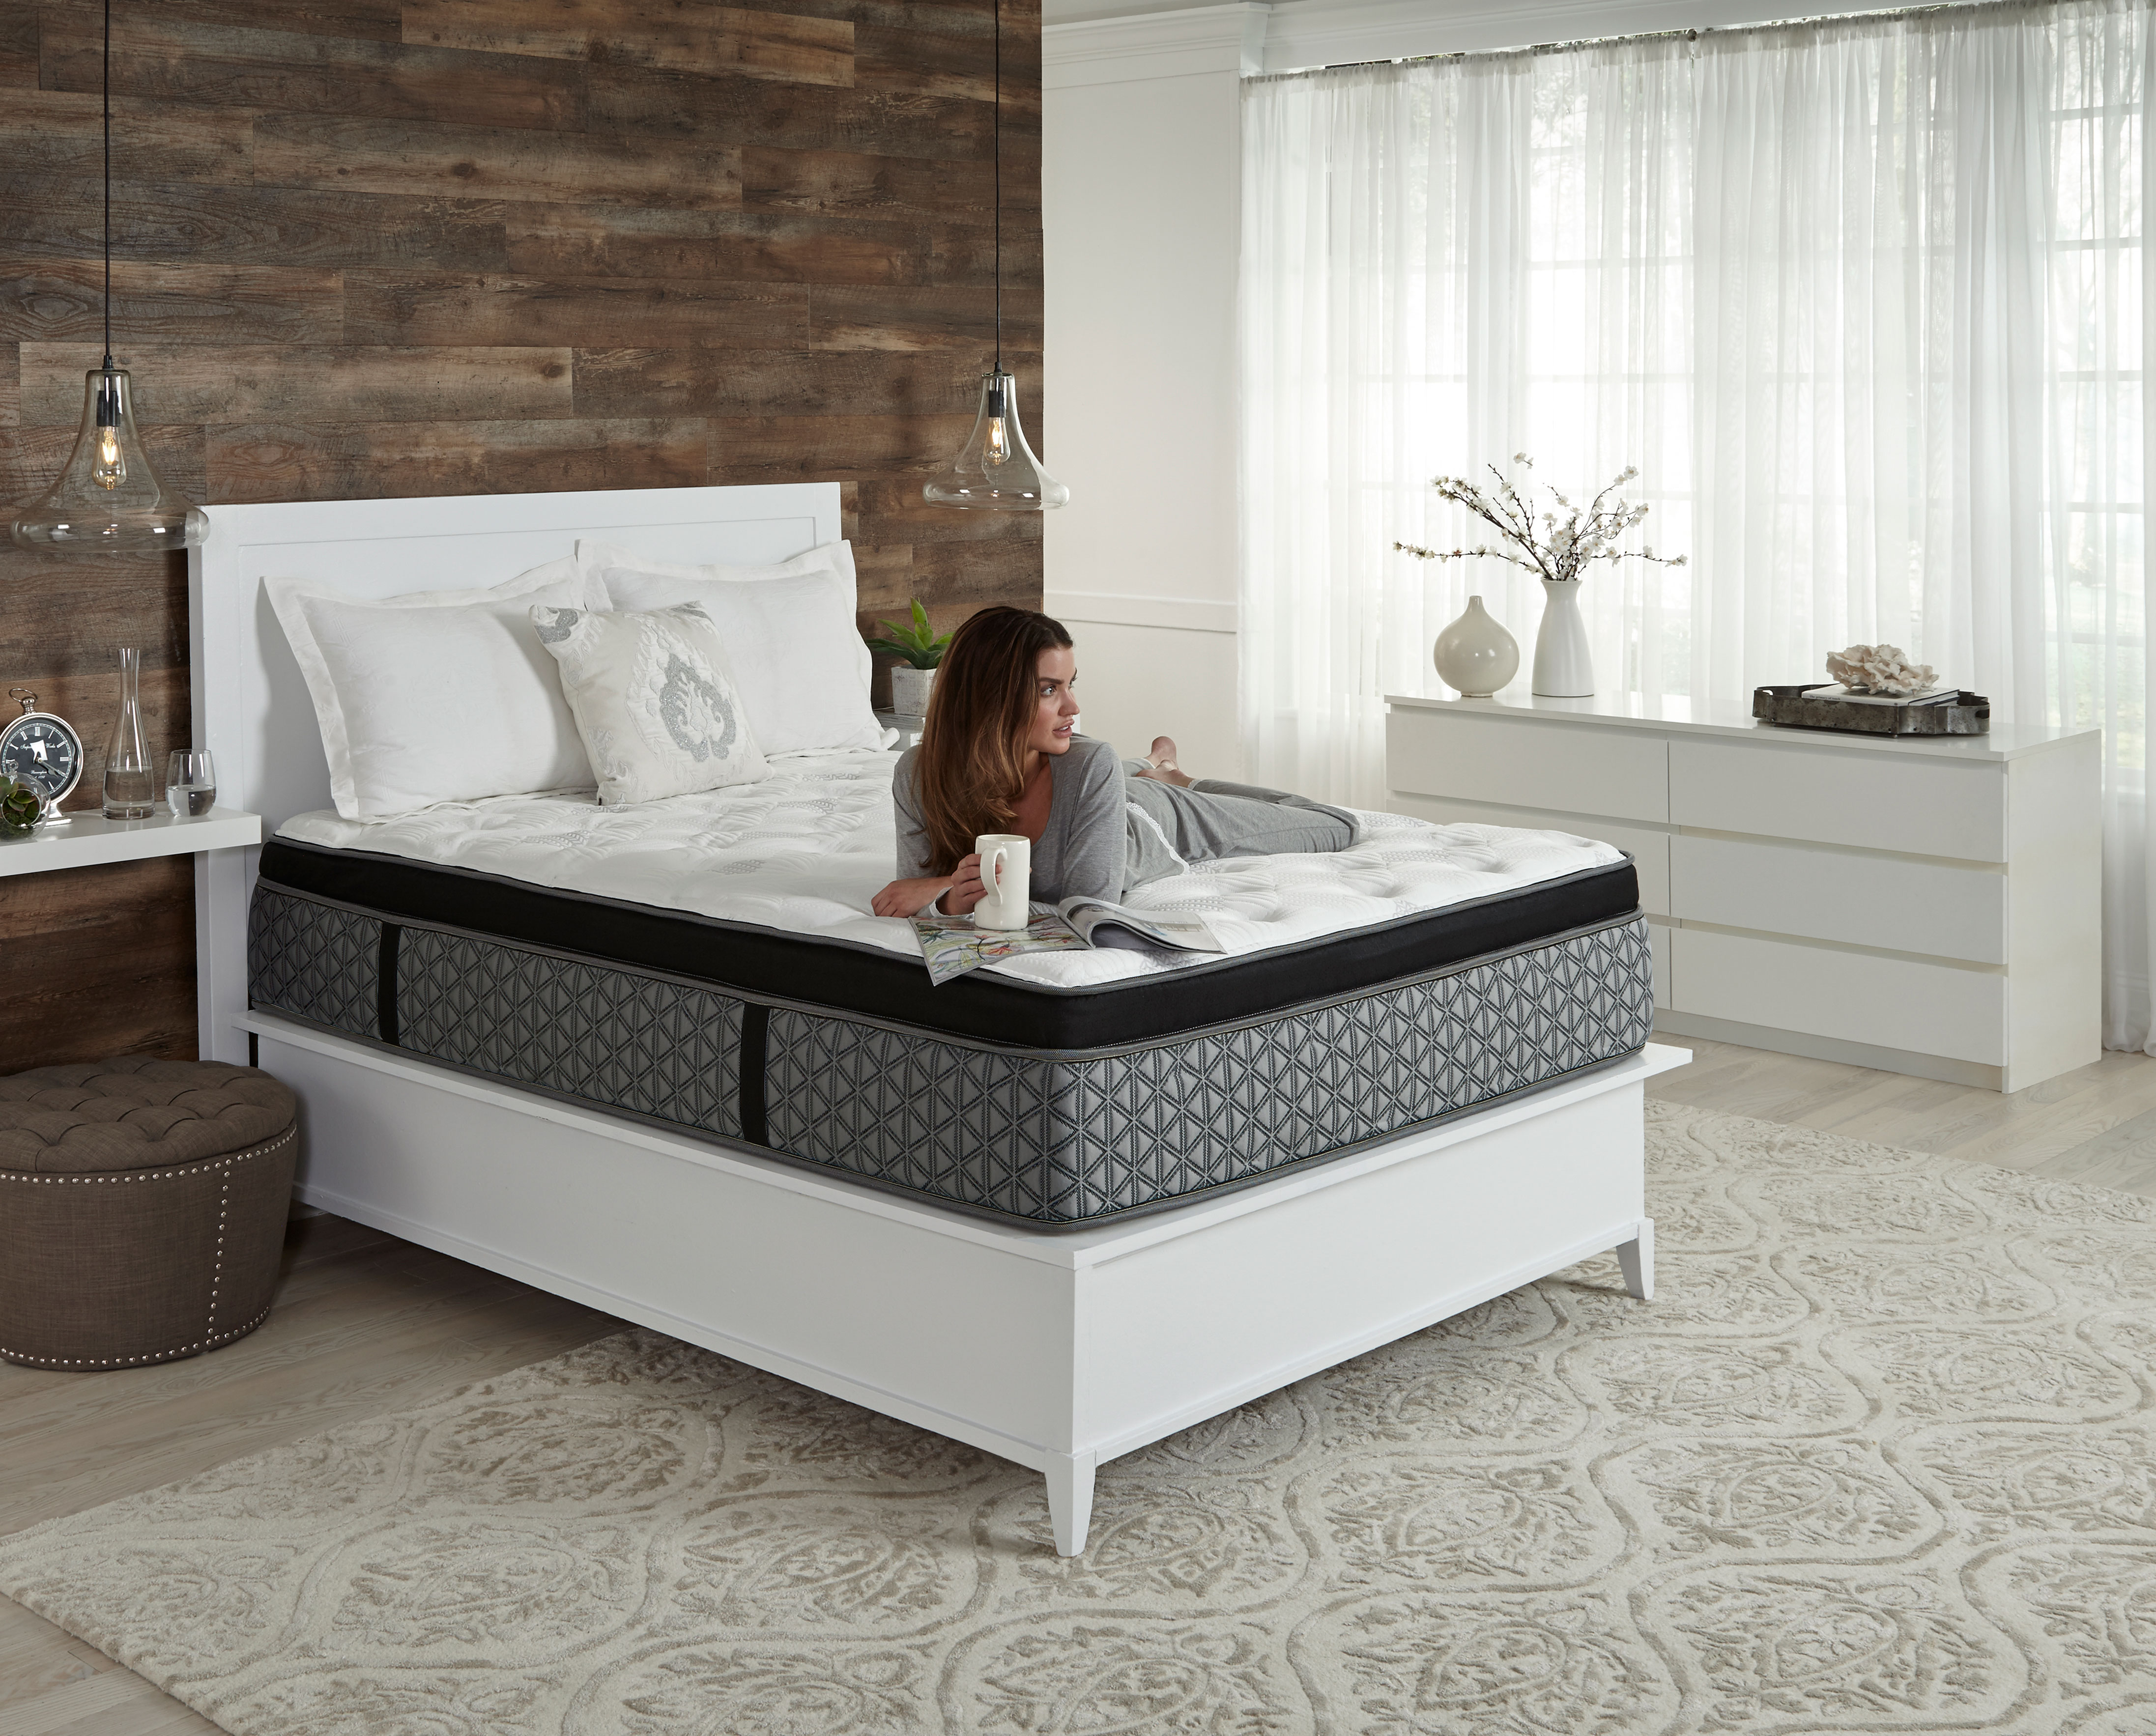 restonic adjustable mattress reviews